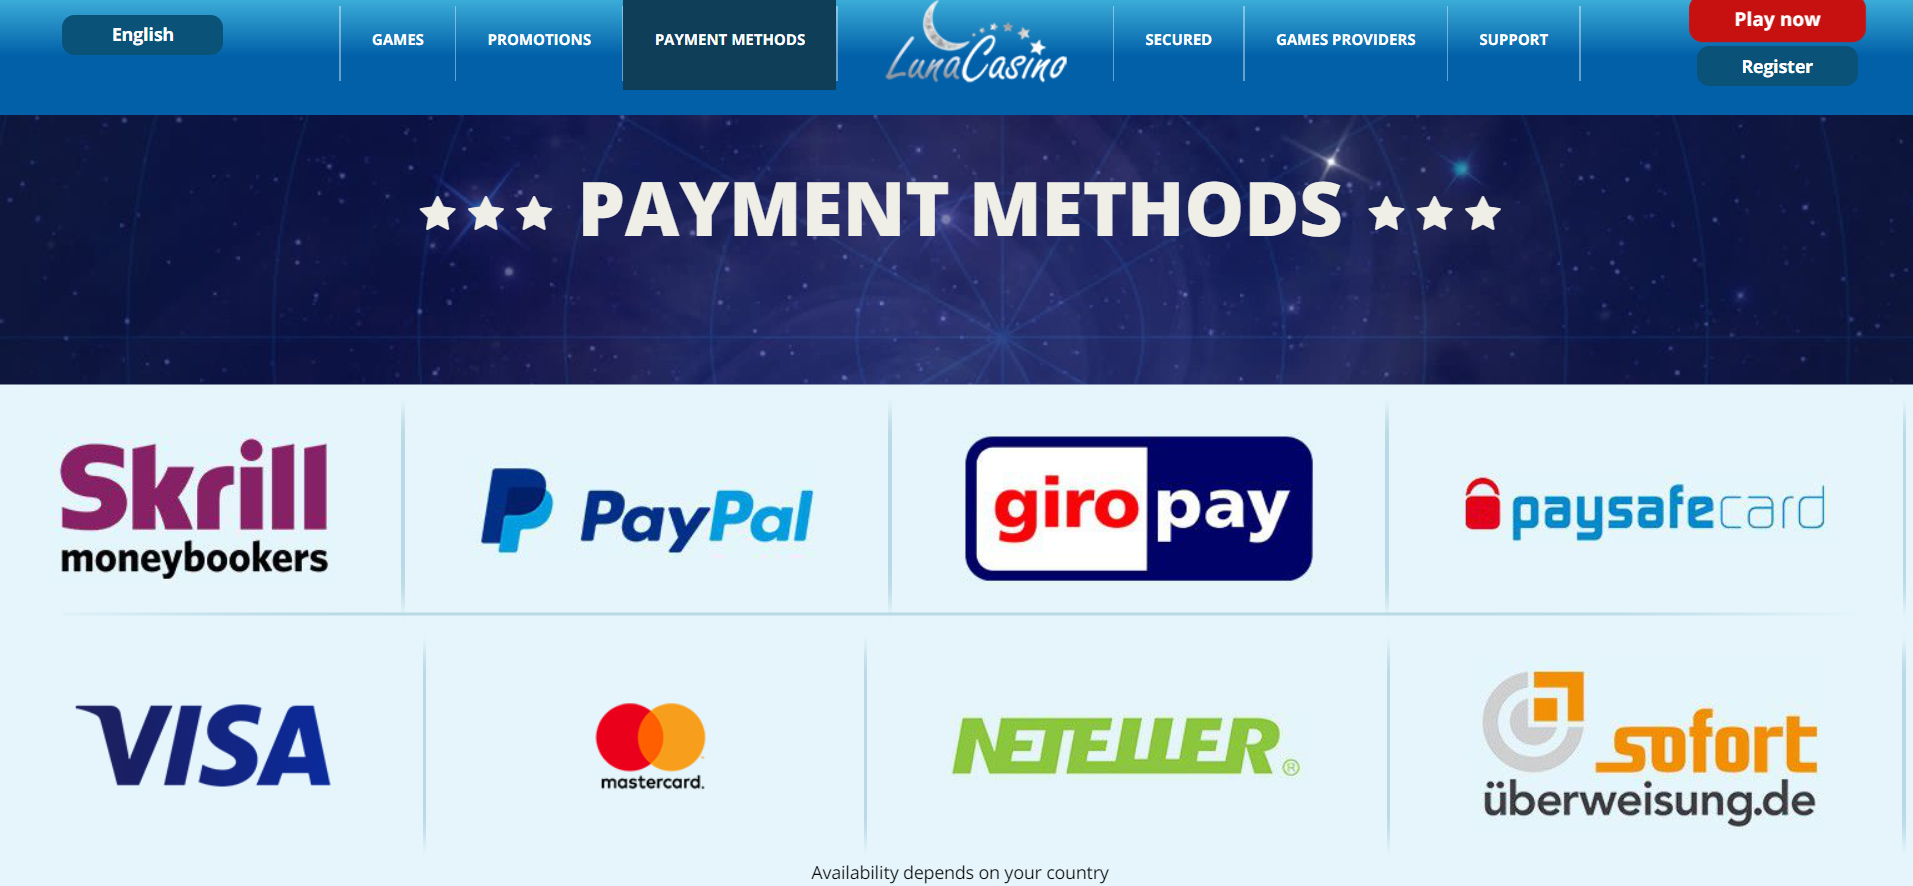 LunaCasino Payment Methods